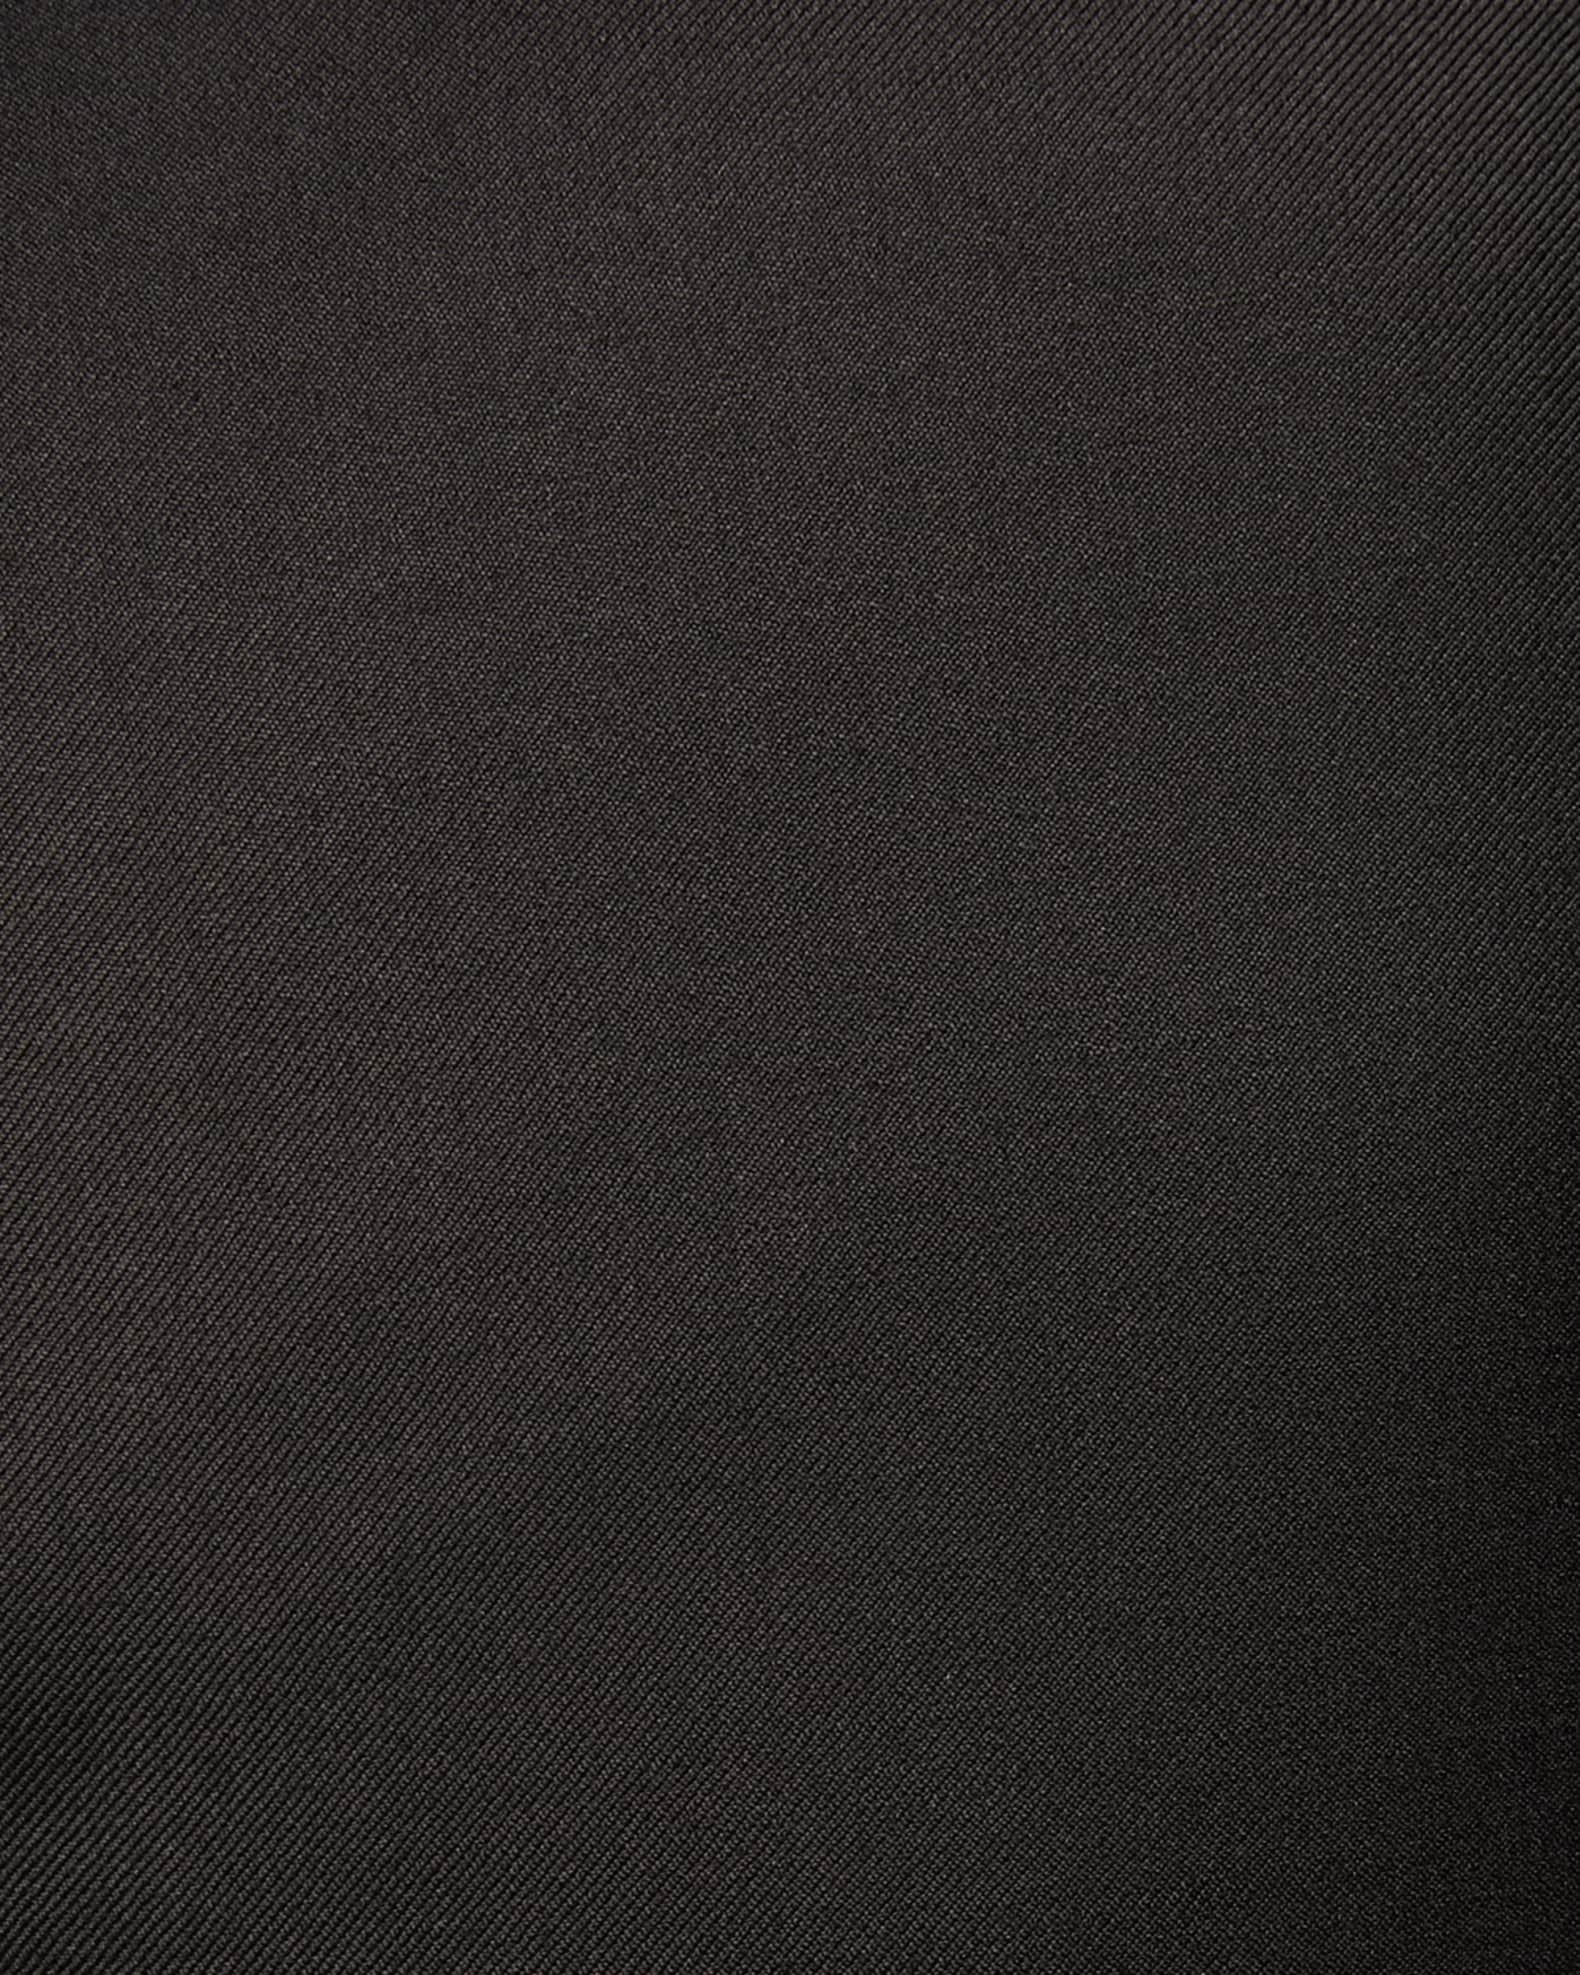 Emporio Armani Super 130s Wool Two-Piece Suit, Black | Neiman Marcus